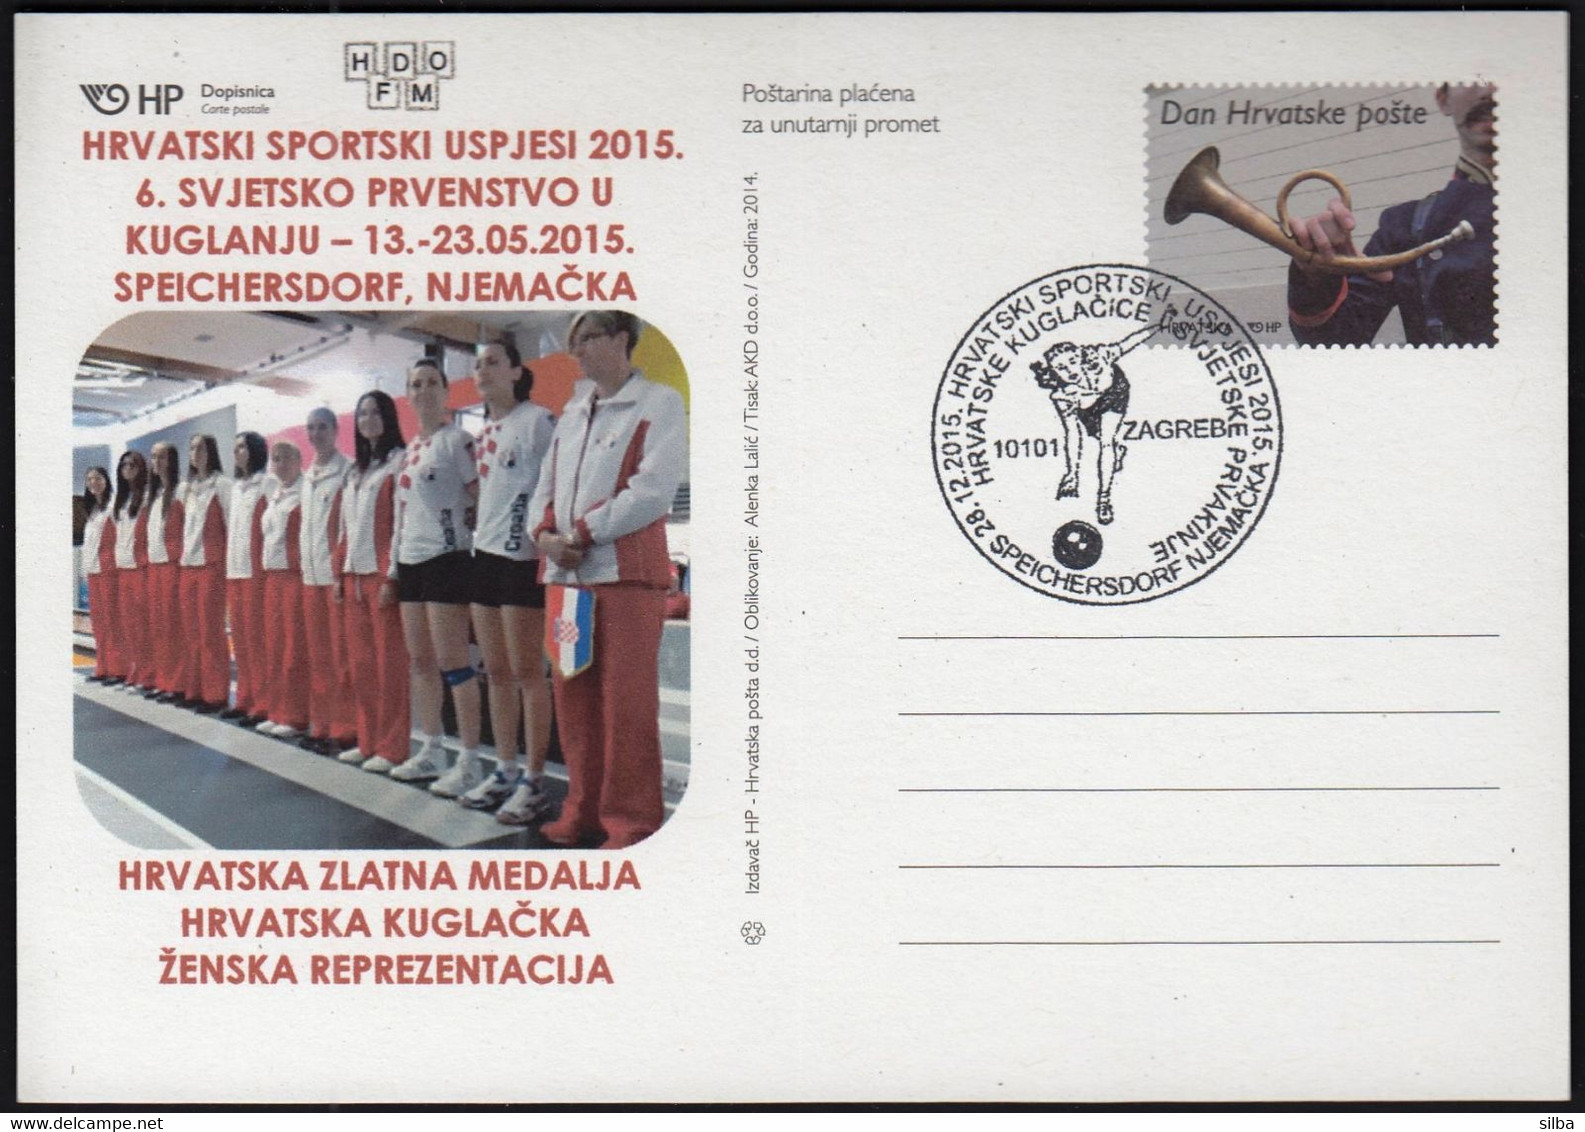 Croatia Zagreb 2015 / Croatian Sports Successes In 2015 / 6th WC Speichersdorf, Bowling / Gold Croatian Women Team - Petanca